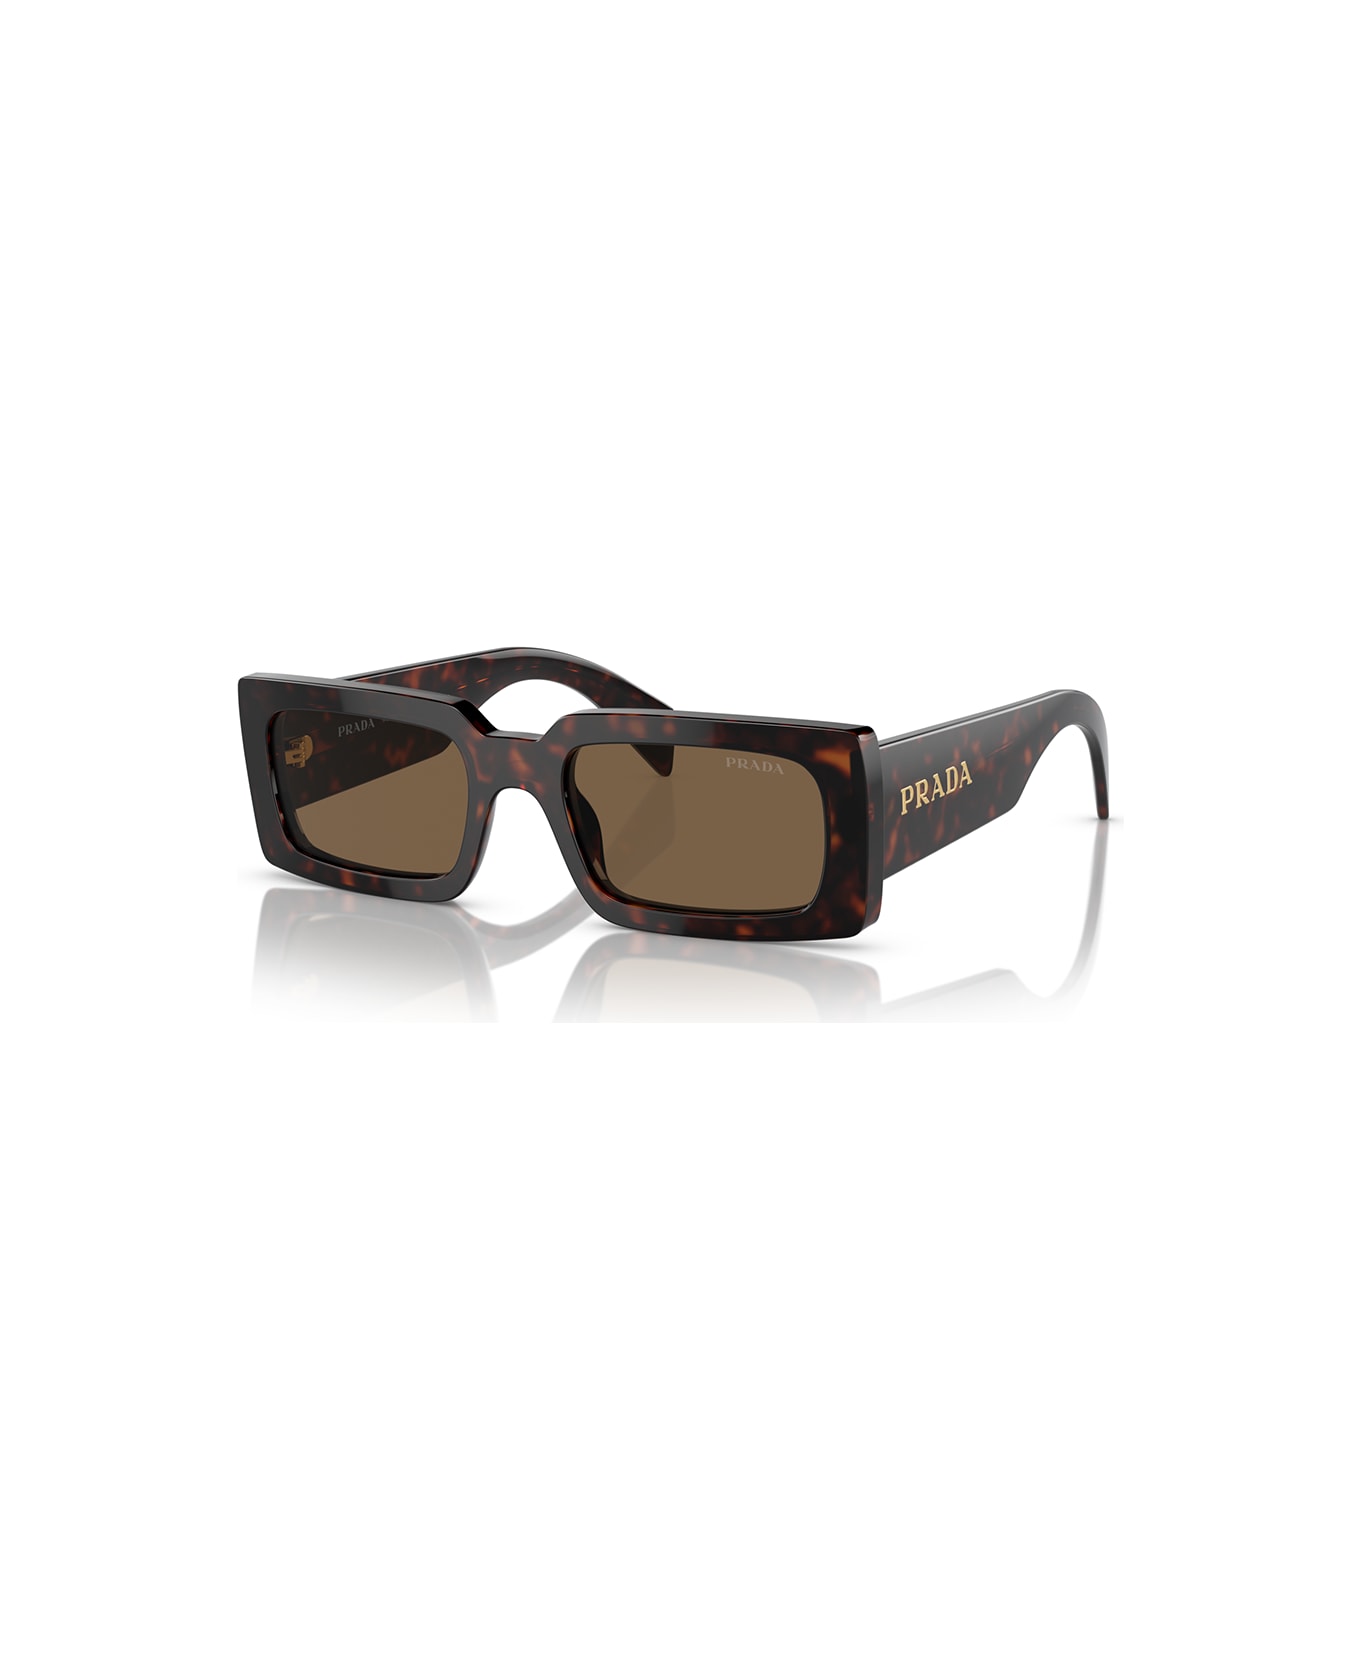 Prada Eyewear Sunglasses - Havana/Marrone